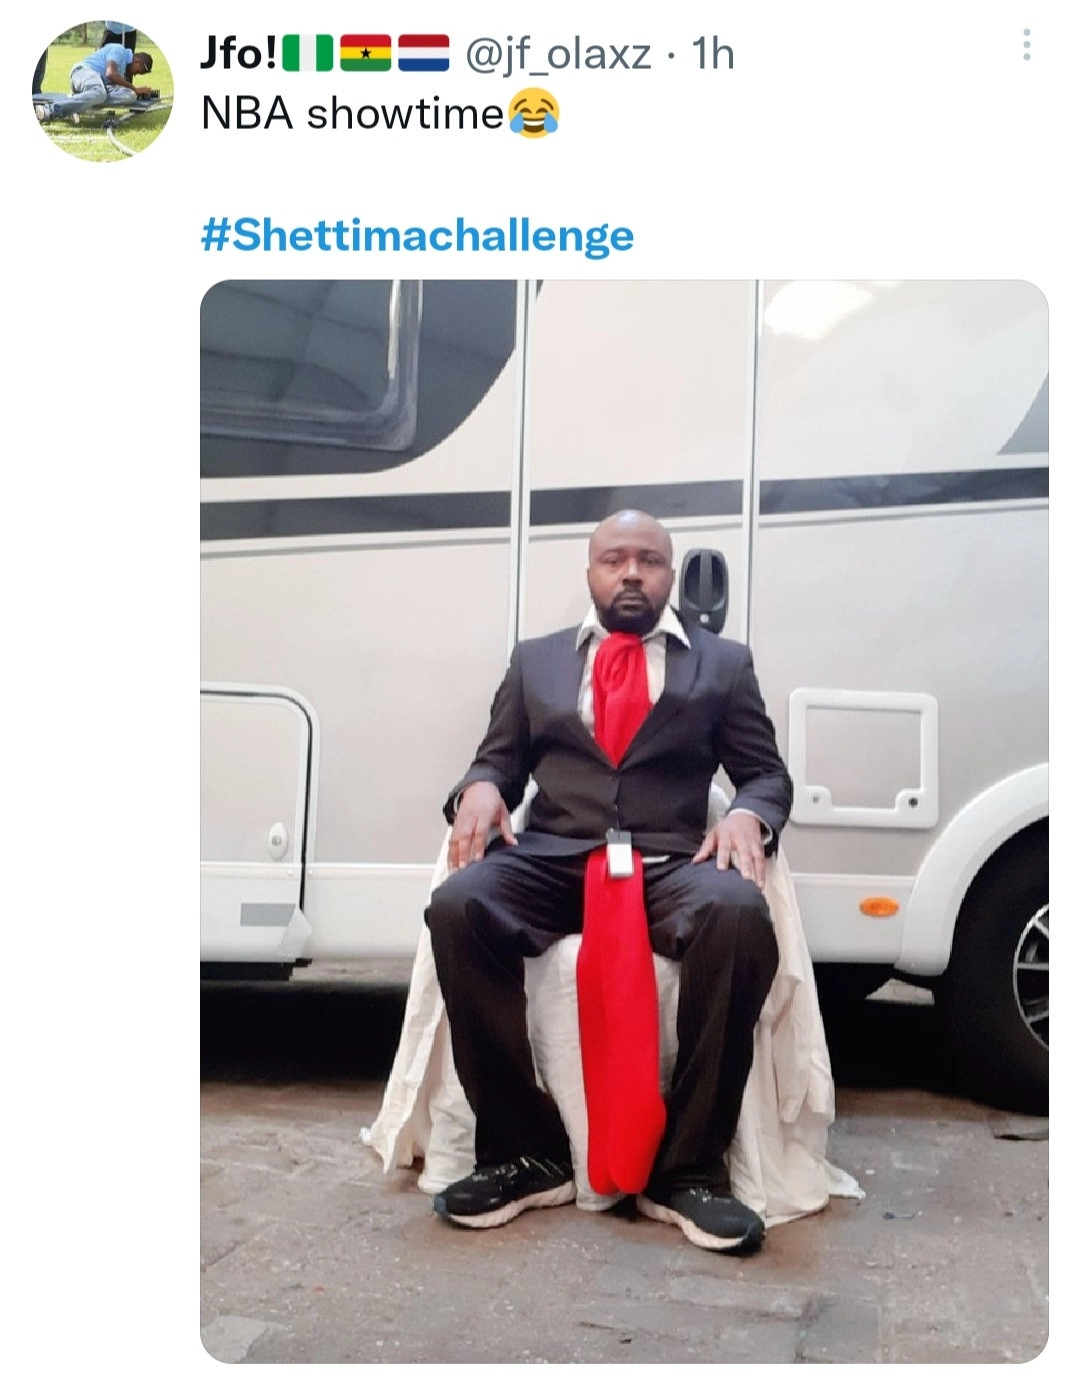 Nigerians Start #ShettimaChallenge, Recreate Outfit Worn by Kashim Shettima to the NBA Conference (Photos)